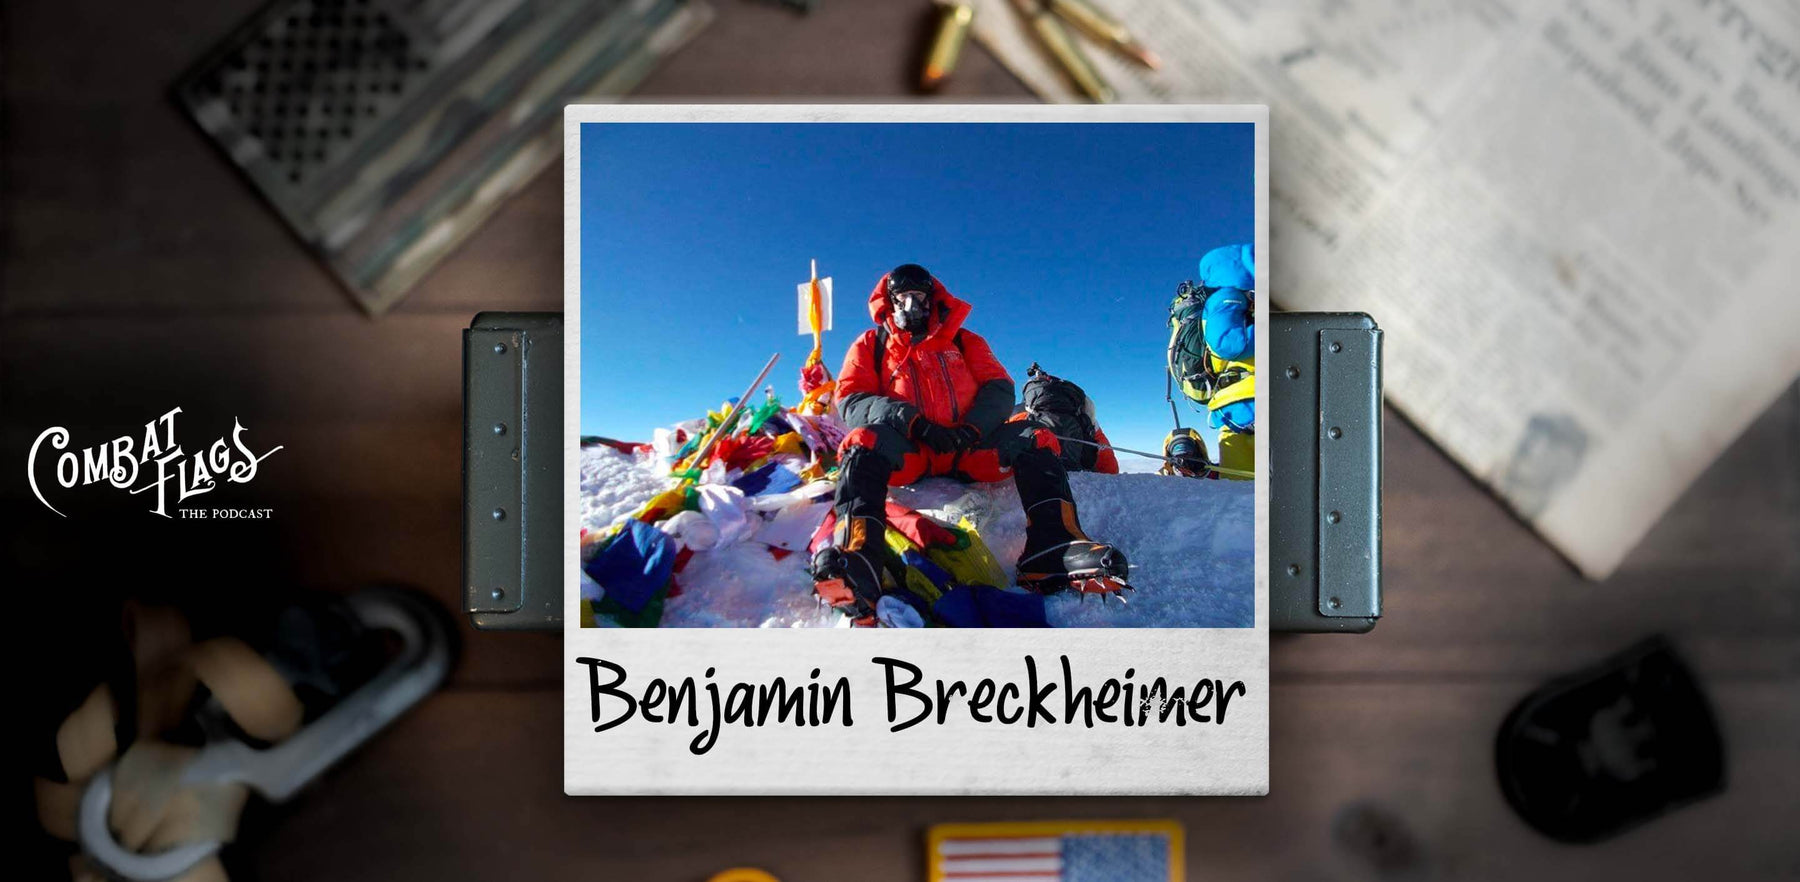 002: Benjamin Breckheimer